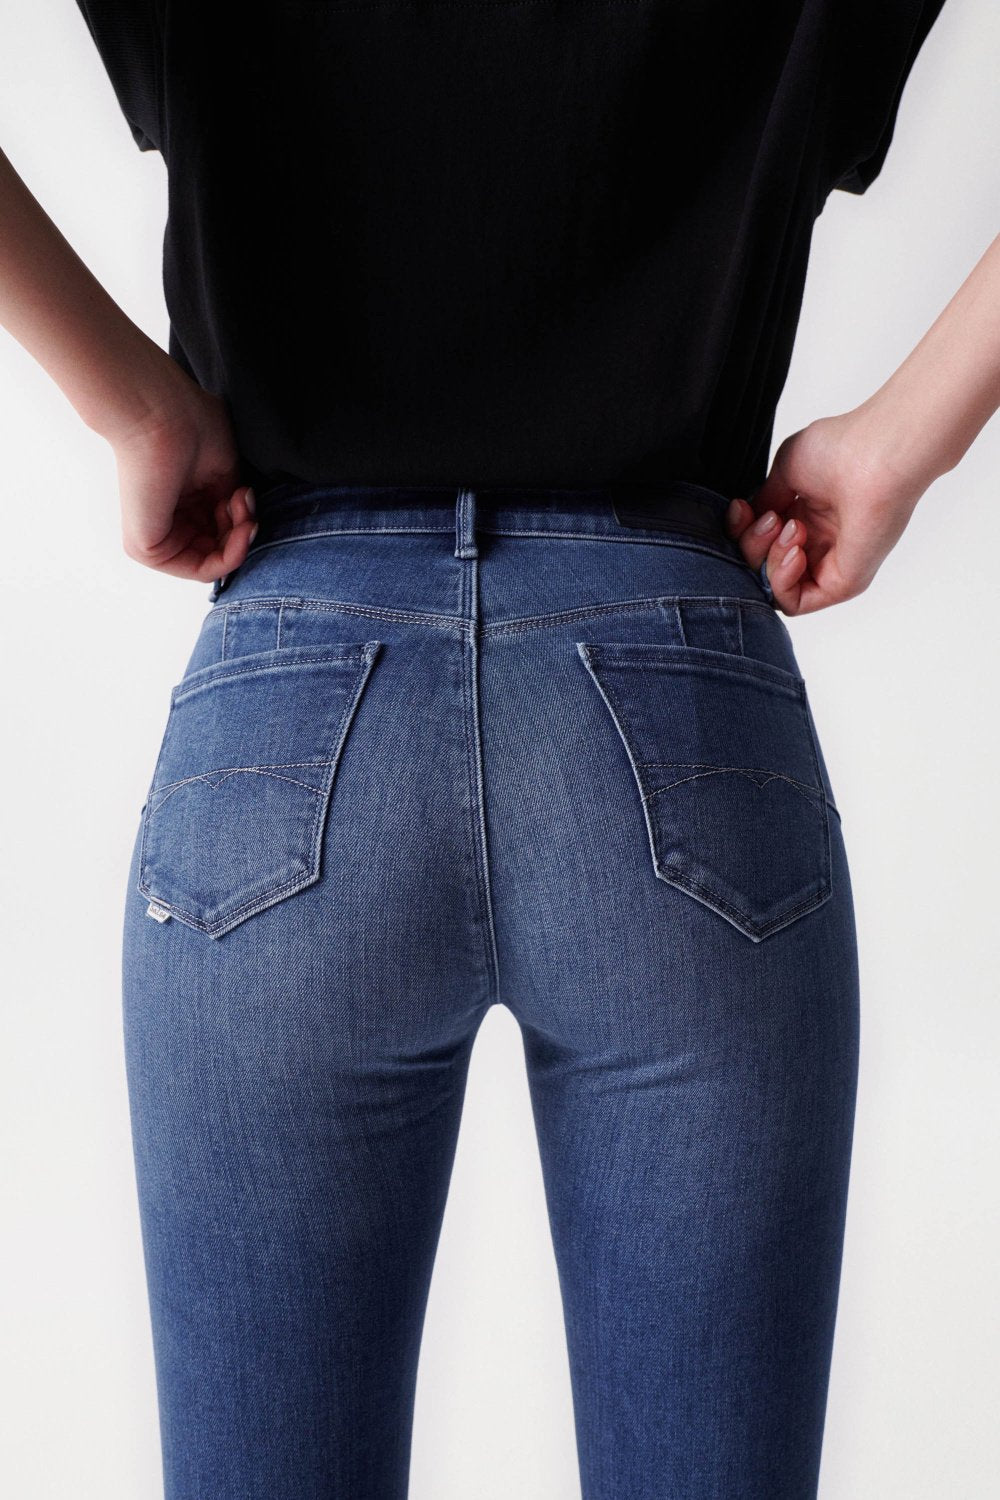 Destiny Skinny Push-Up in Medium Wash Jeans Salsa Jeans   